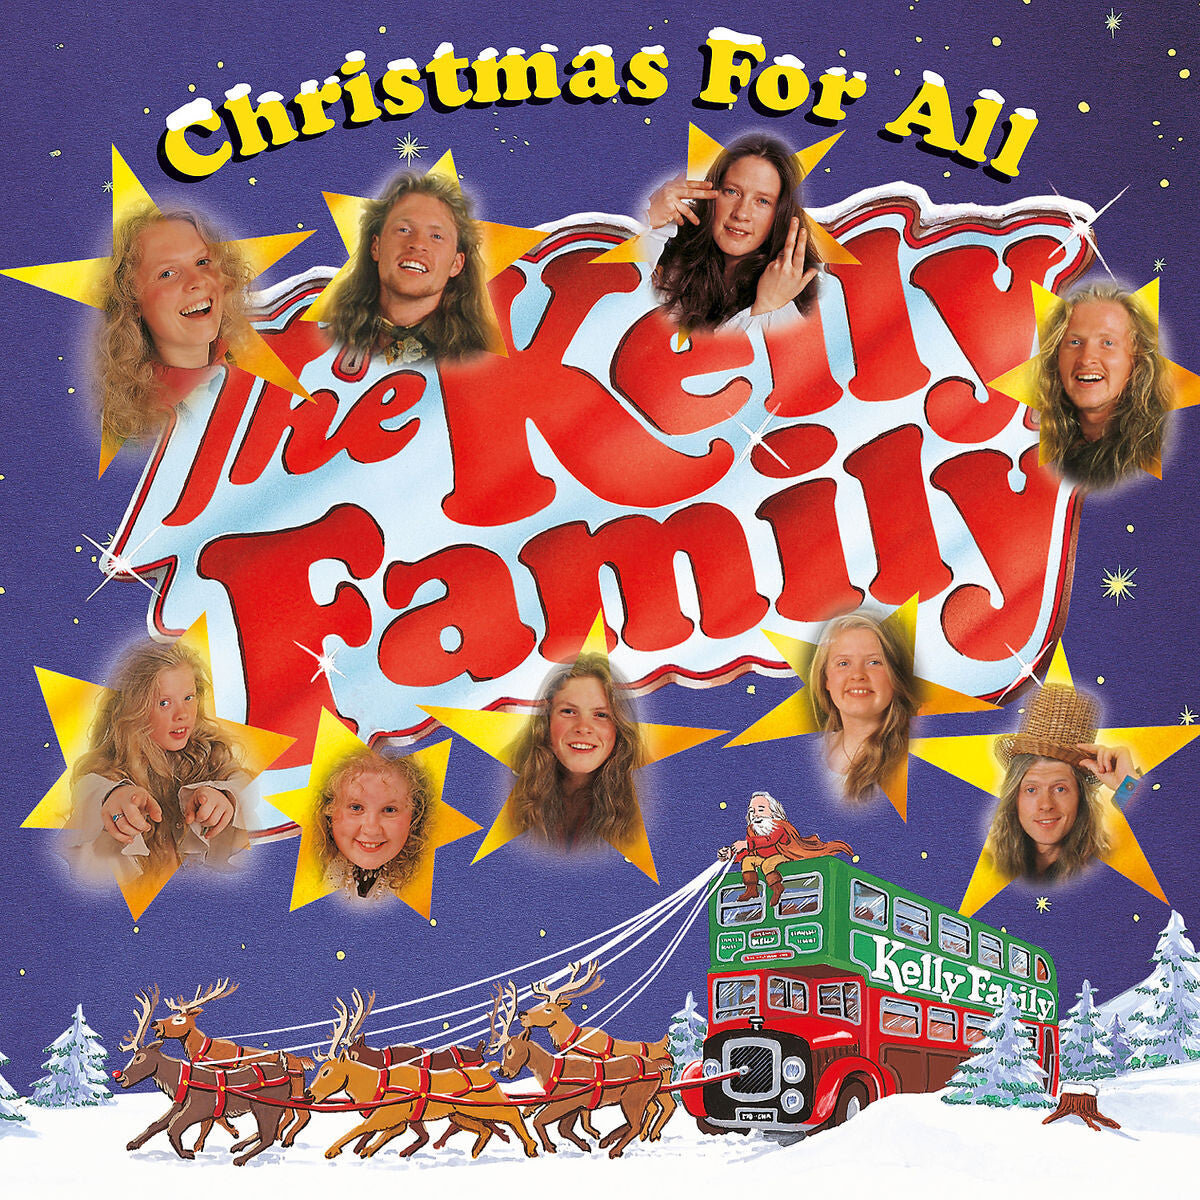 https://images.bravado.de/prod/product-assets/product-asset-data/kelly-family-the/kelly-family/products/139220/web/304034/image-thumb__304034__3000x3000_original/The-Kelly-Family-Christmas-For-All-CD-139220-304034.4ec55aca.jpg